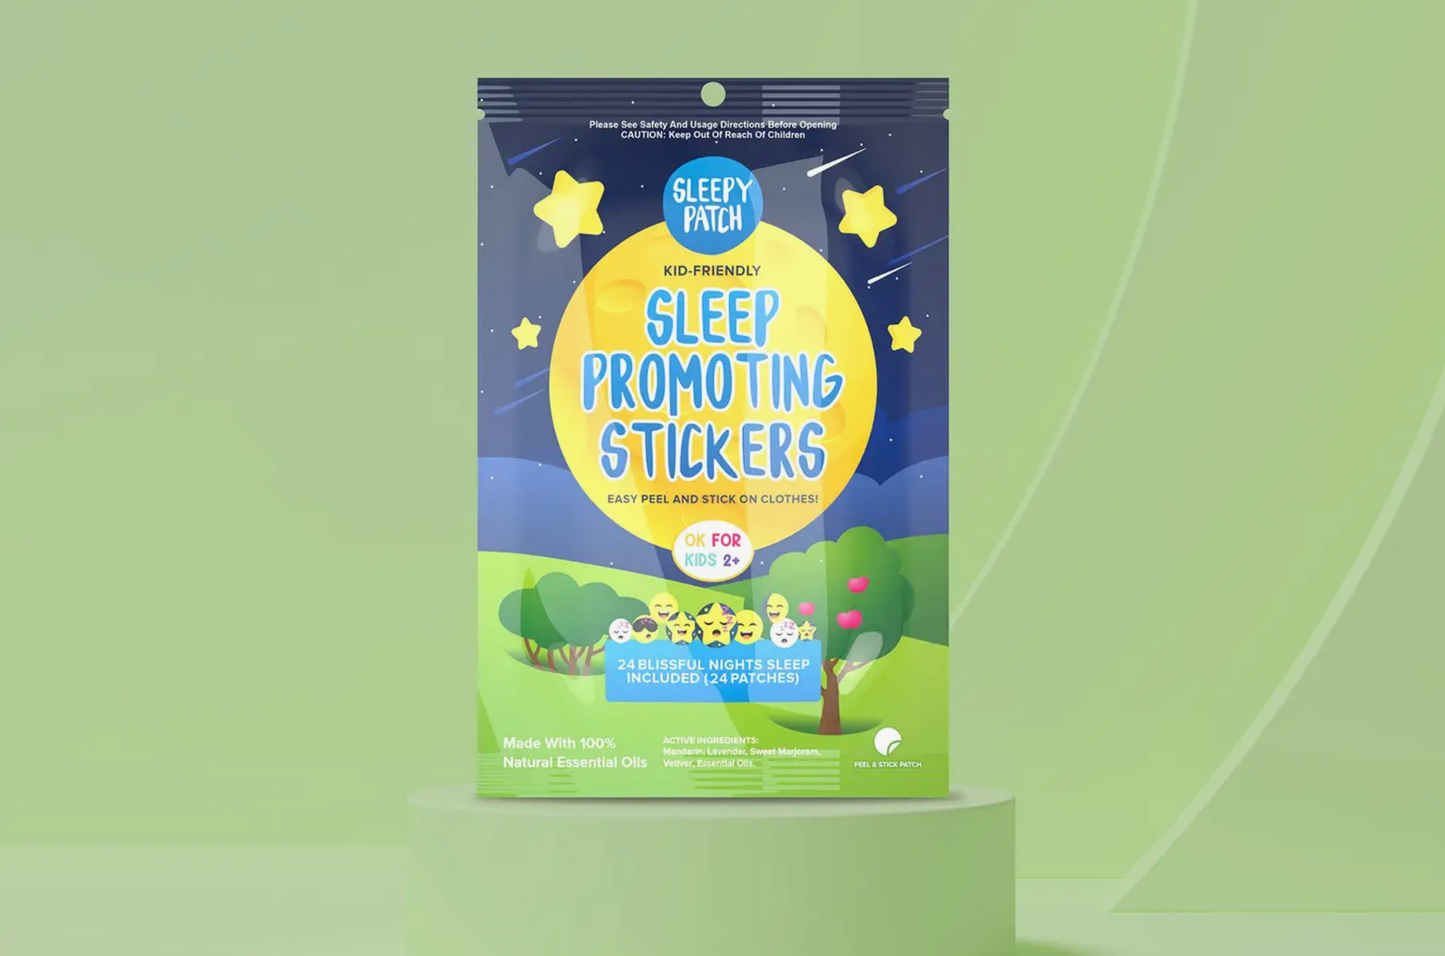 Sleepy Patch - Sleep Promoting Stickers